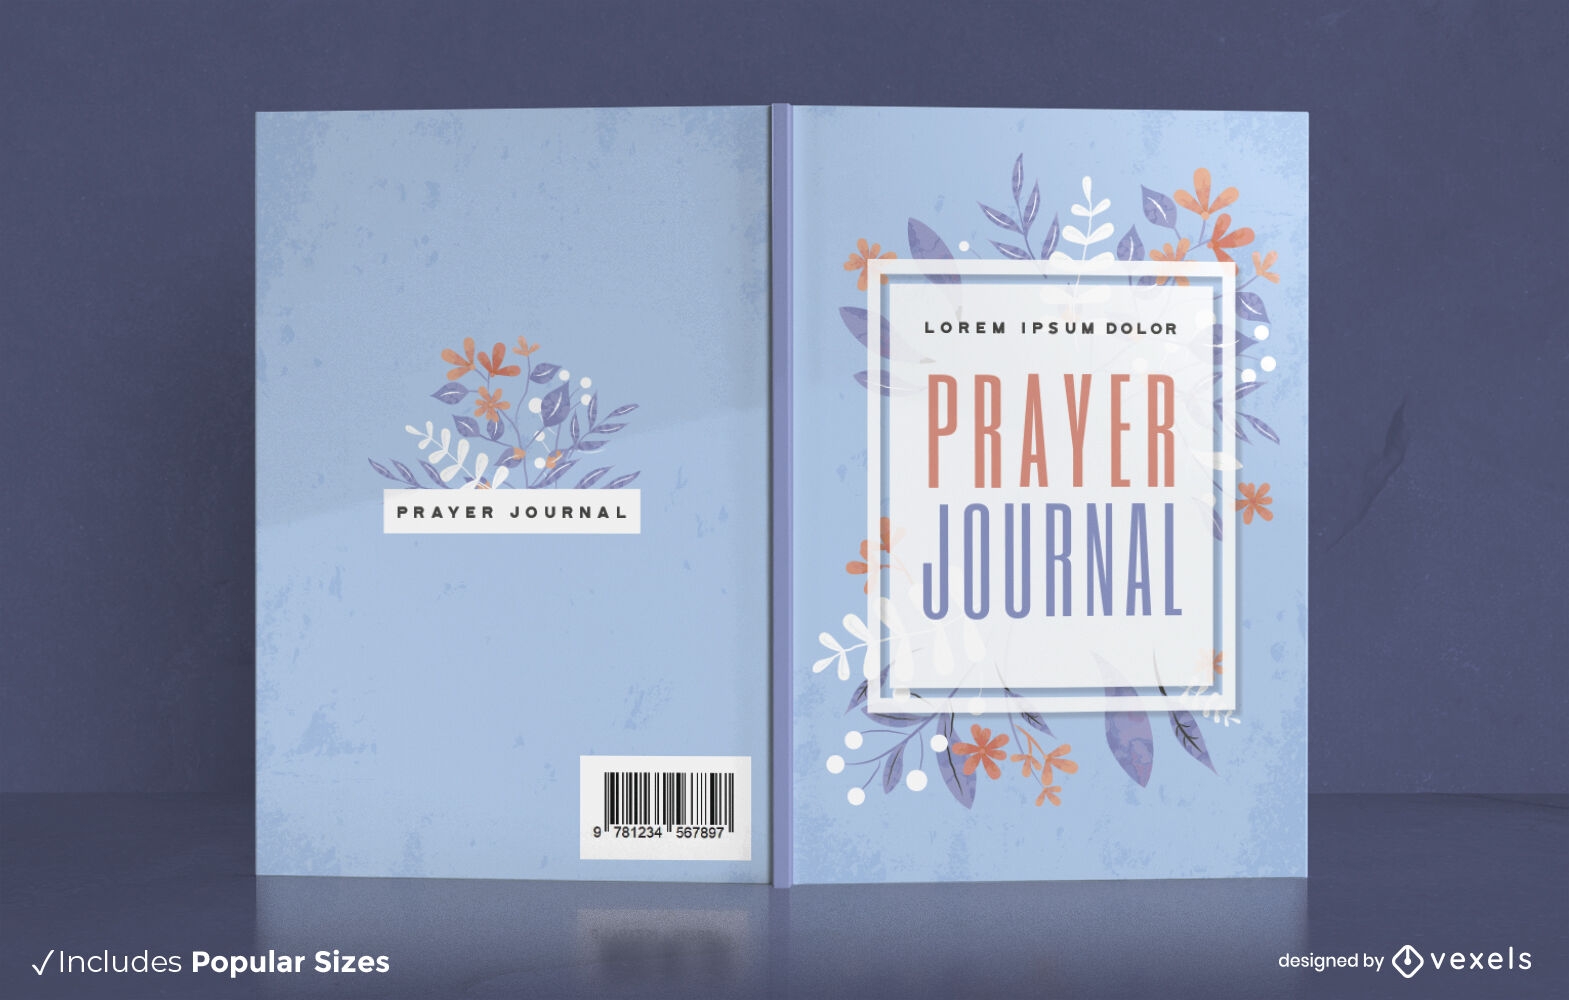 Prayer journal watercolor floral cover design